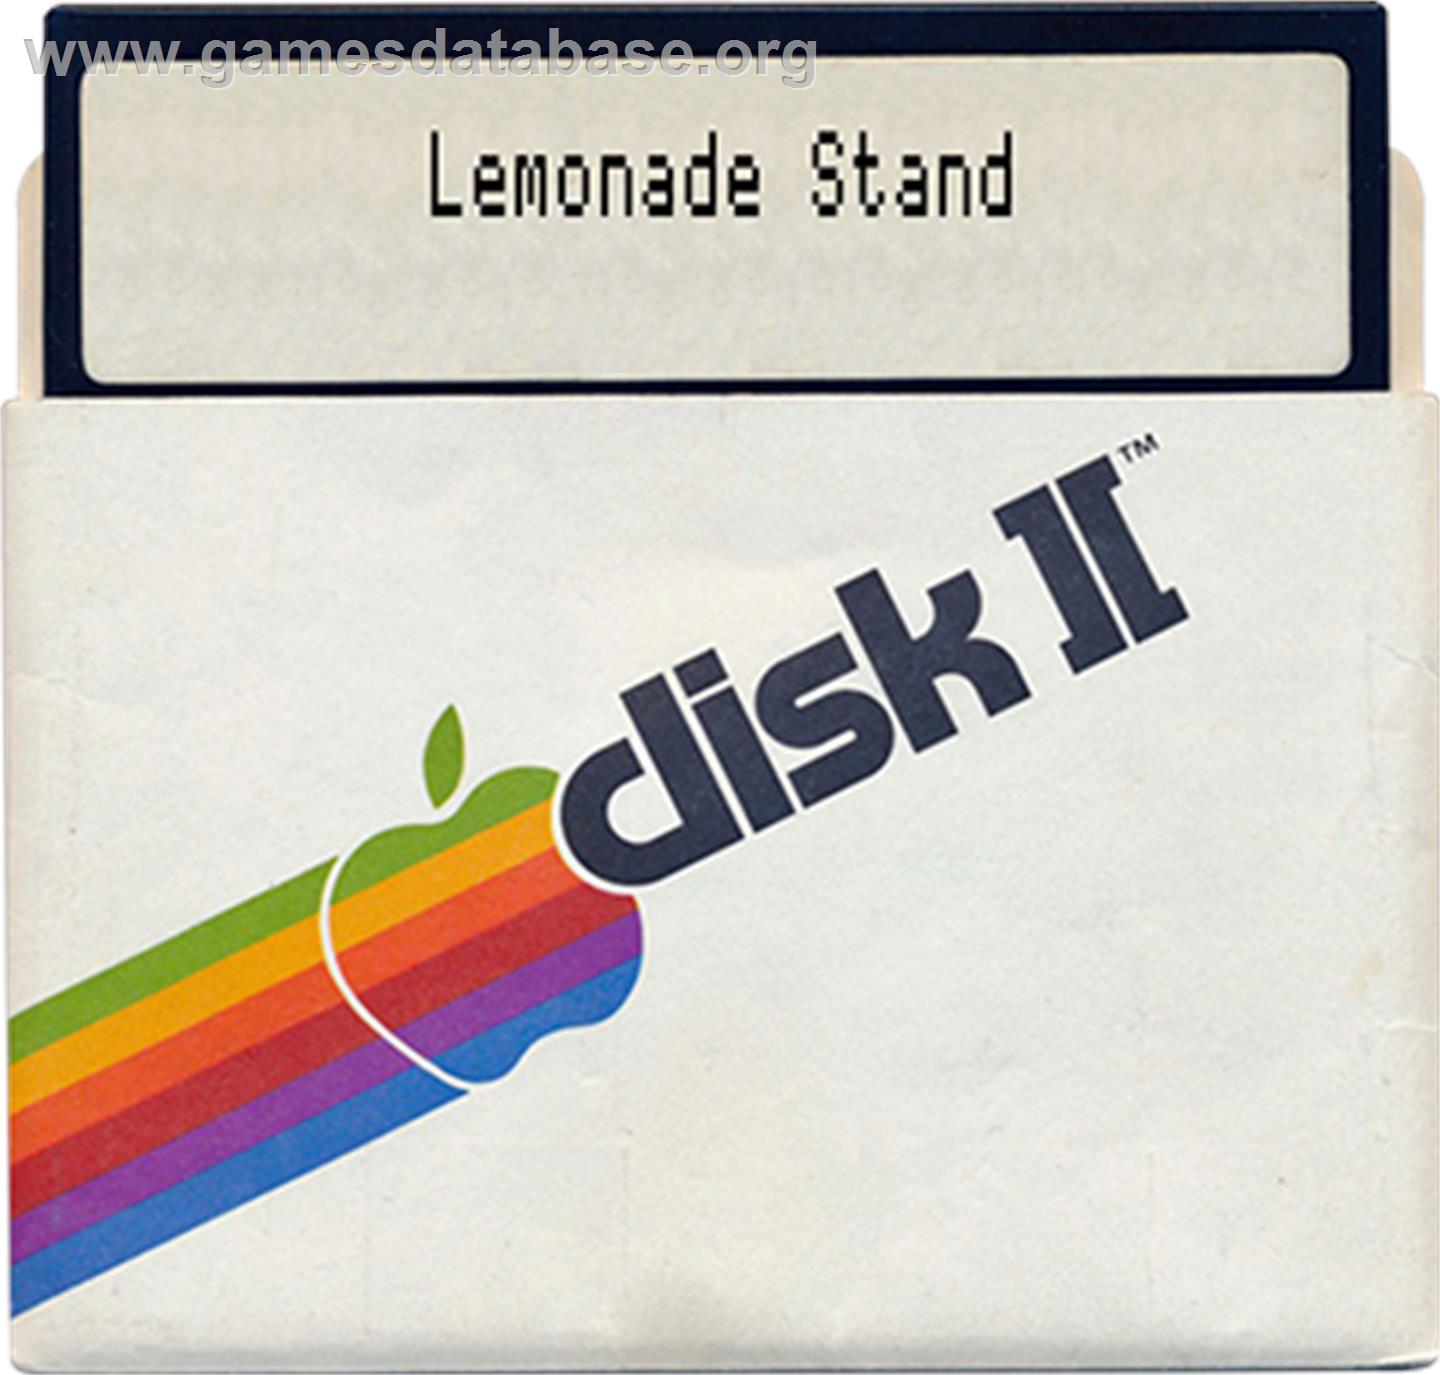 Lemonade Stand - Apple II - Artwork - Disc